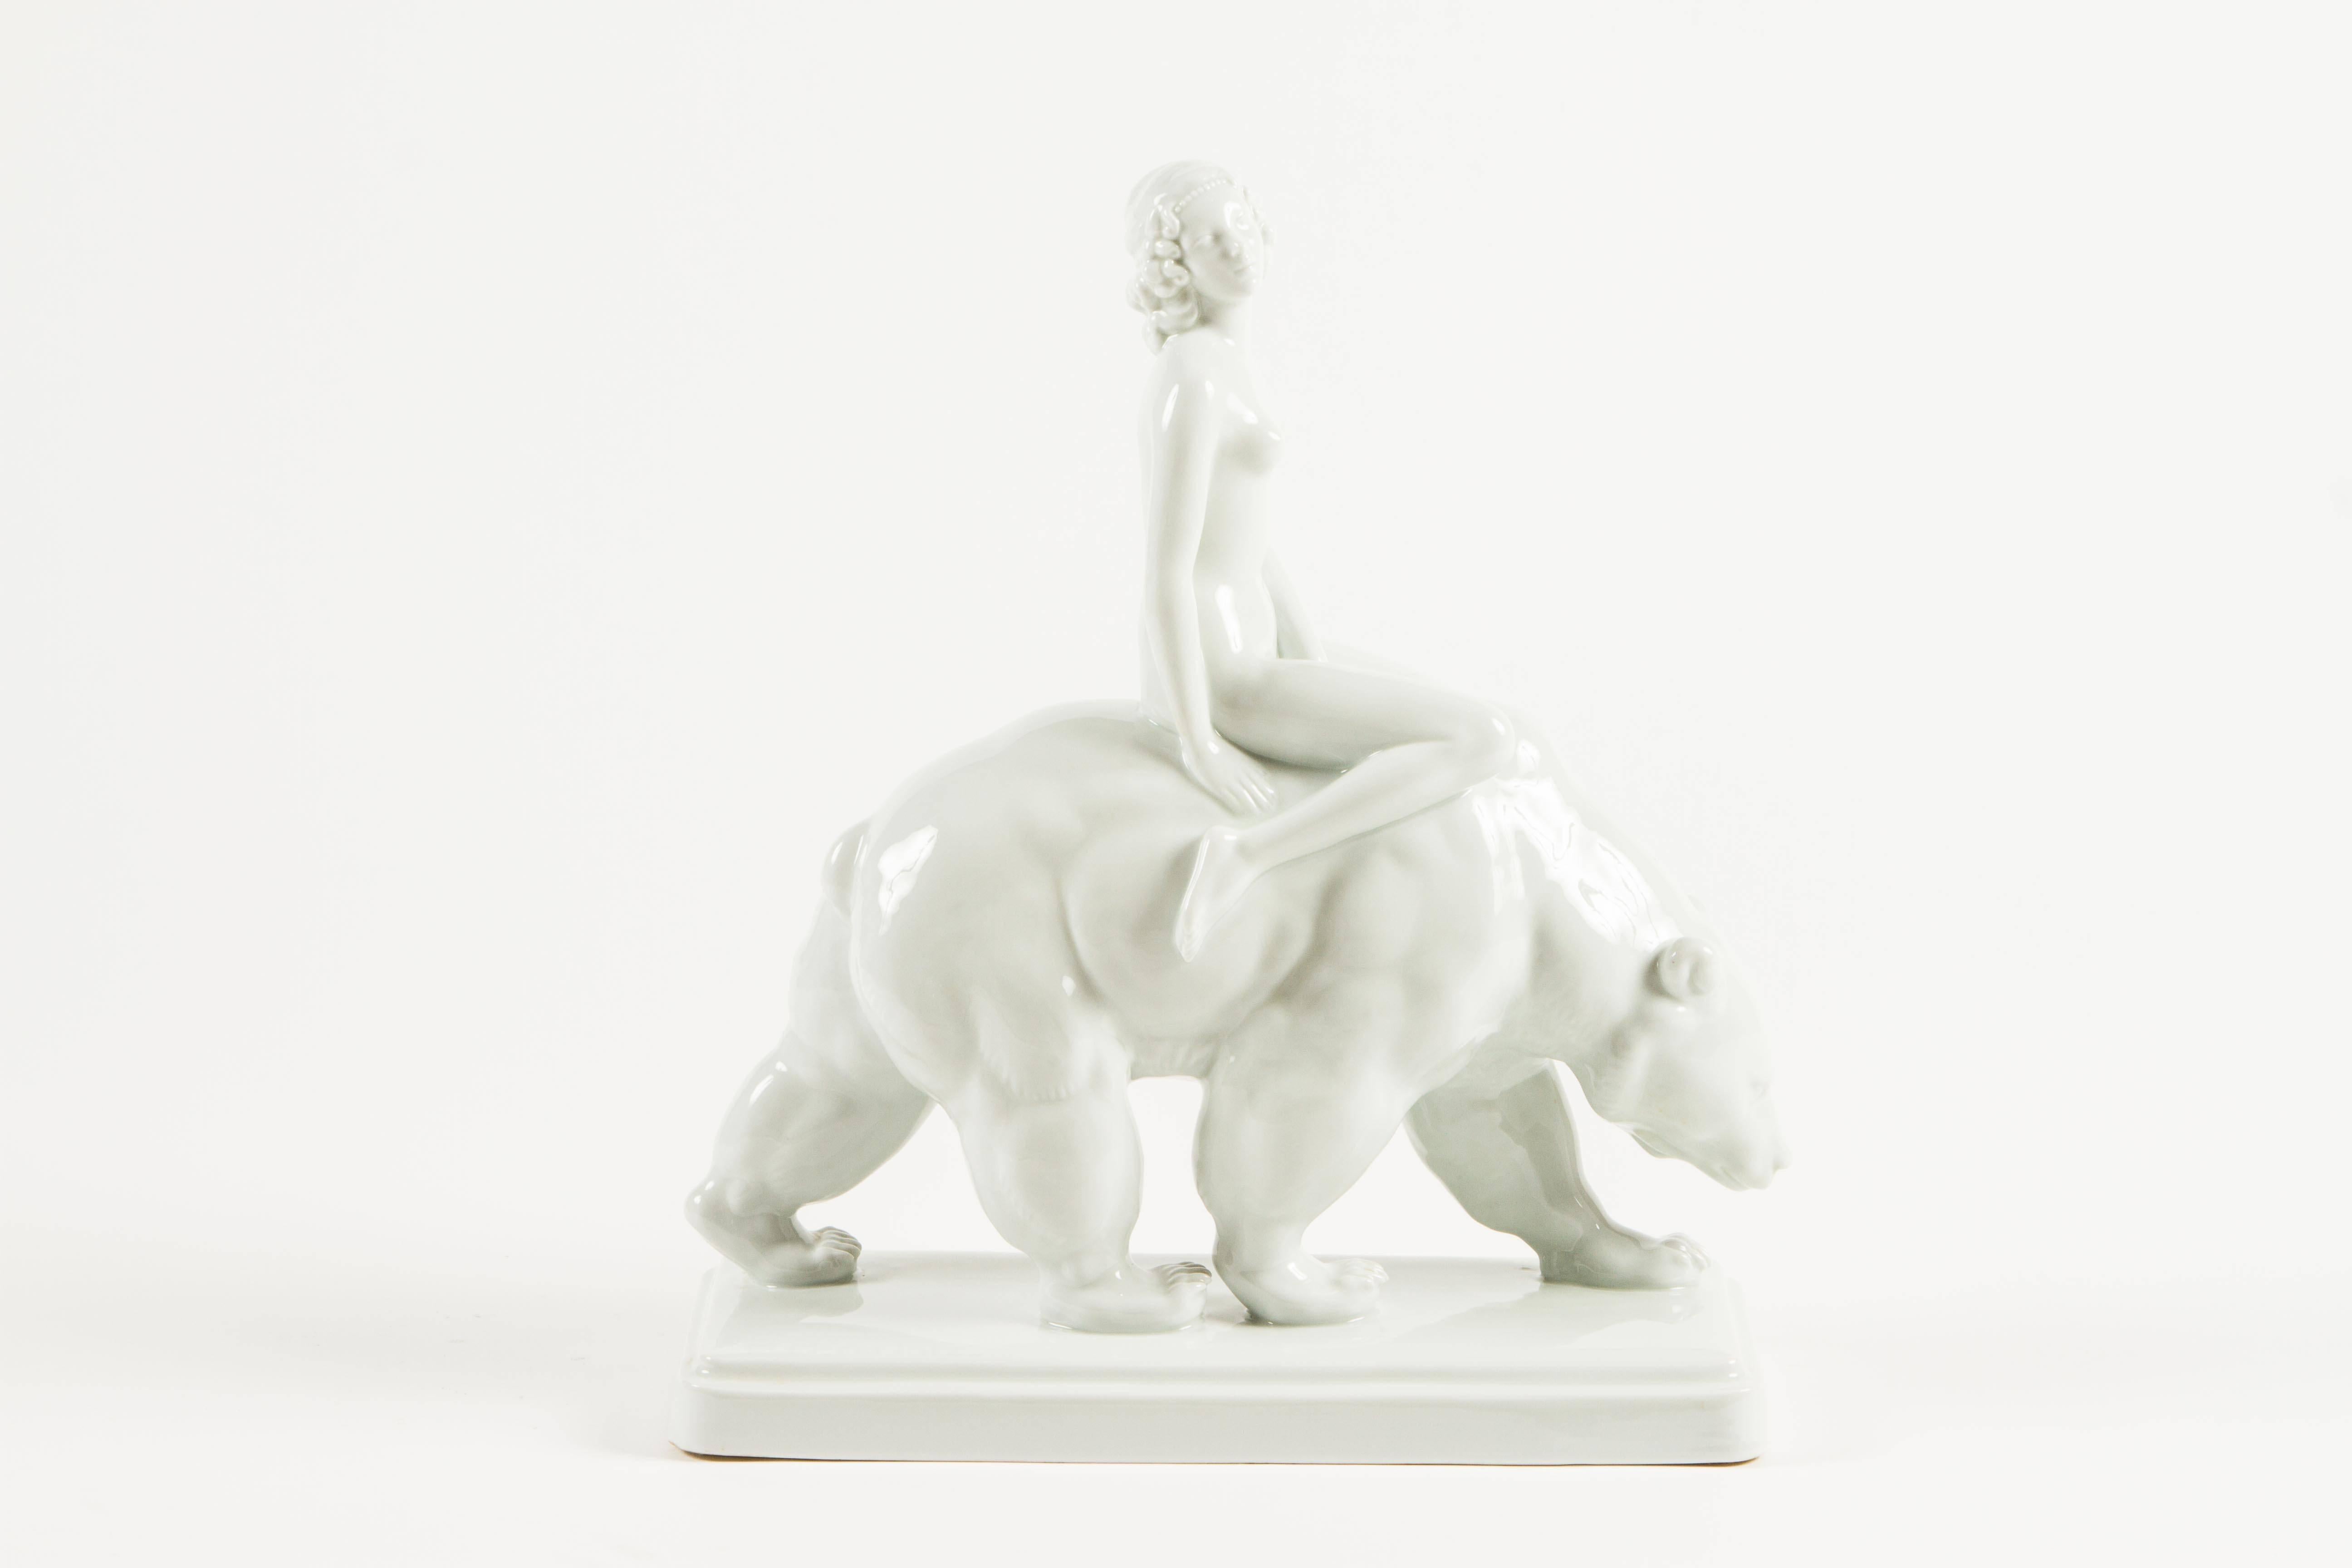 A wonderful Art Deco era figural group depicting a woman astride a polar bear. Standing nearly 20